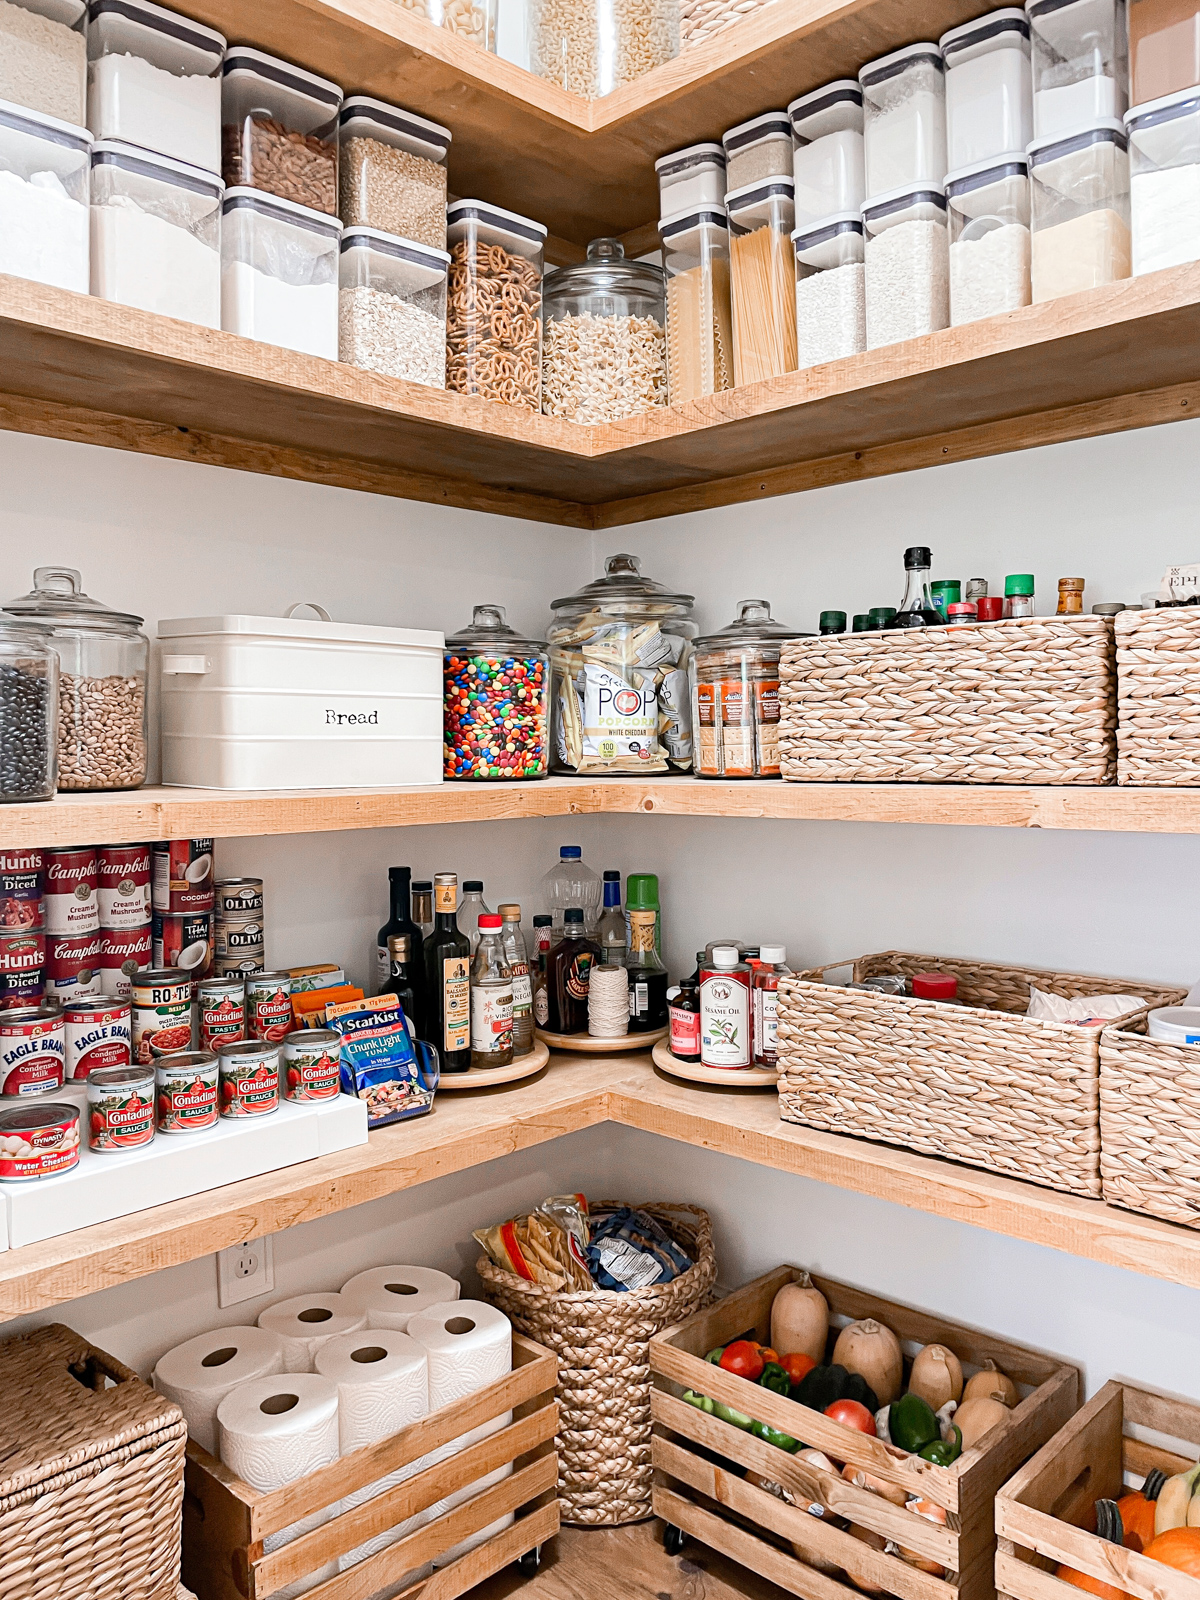 DIY Corner Shelves For Extra Storage And Display